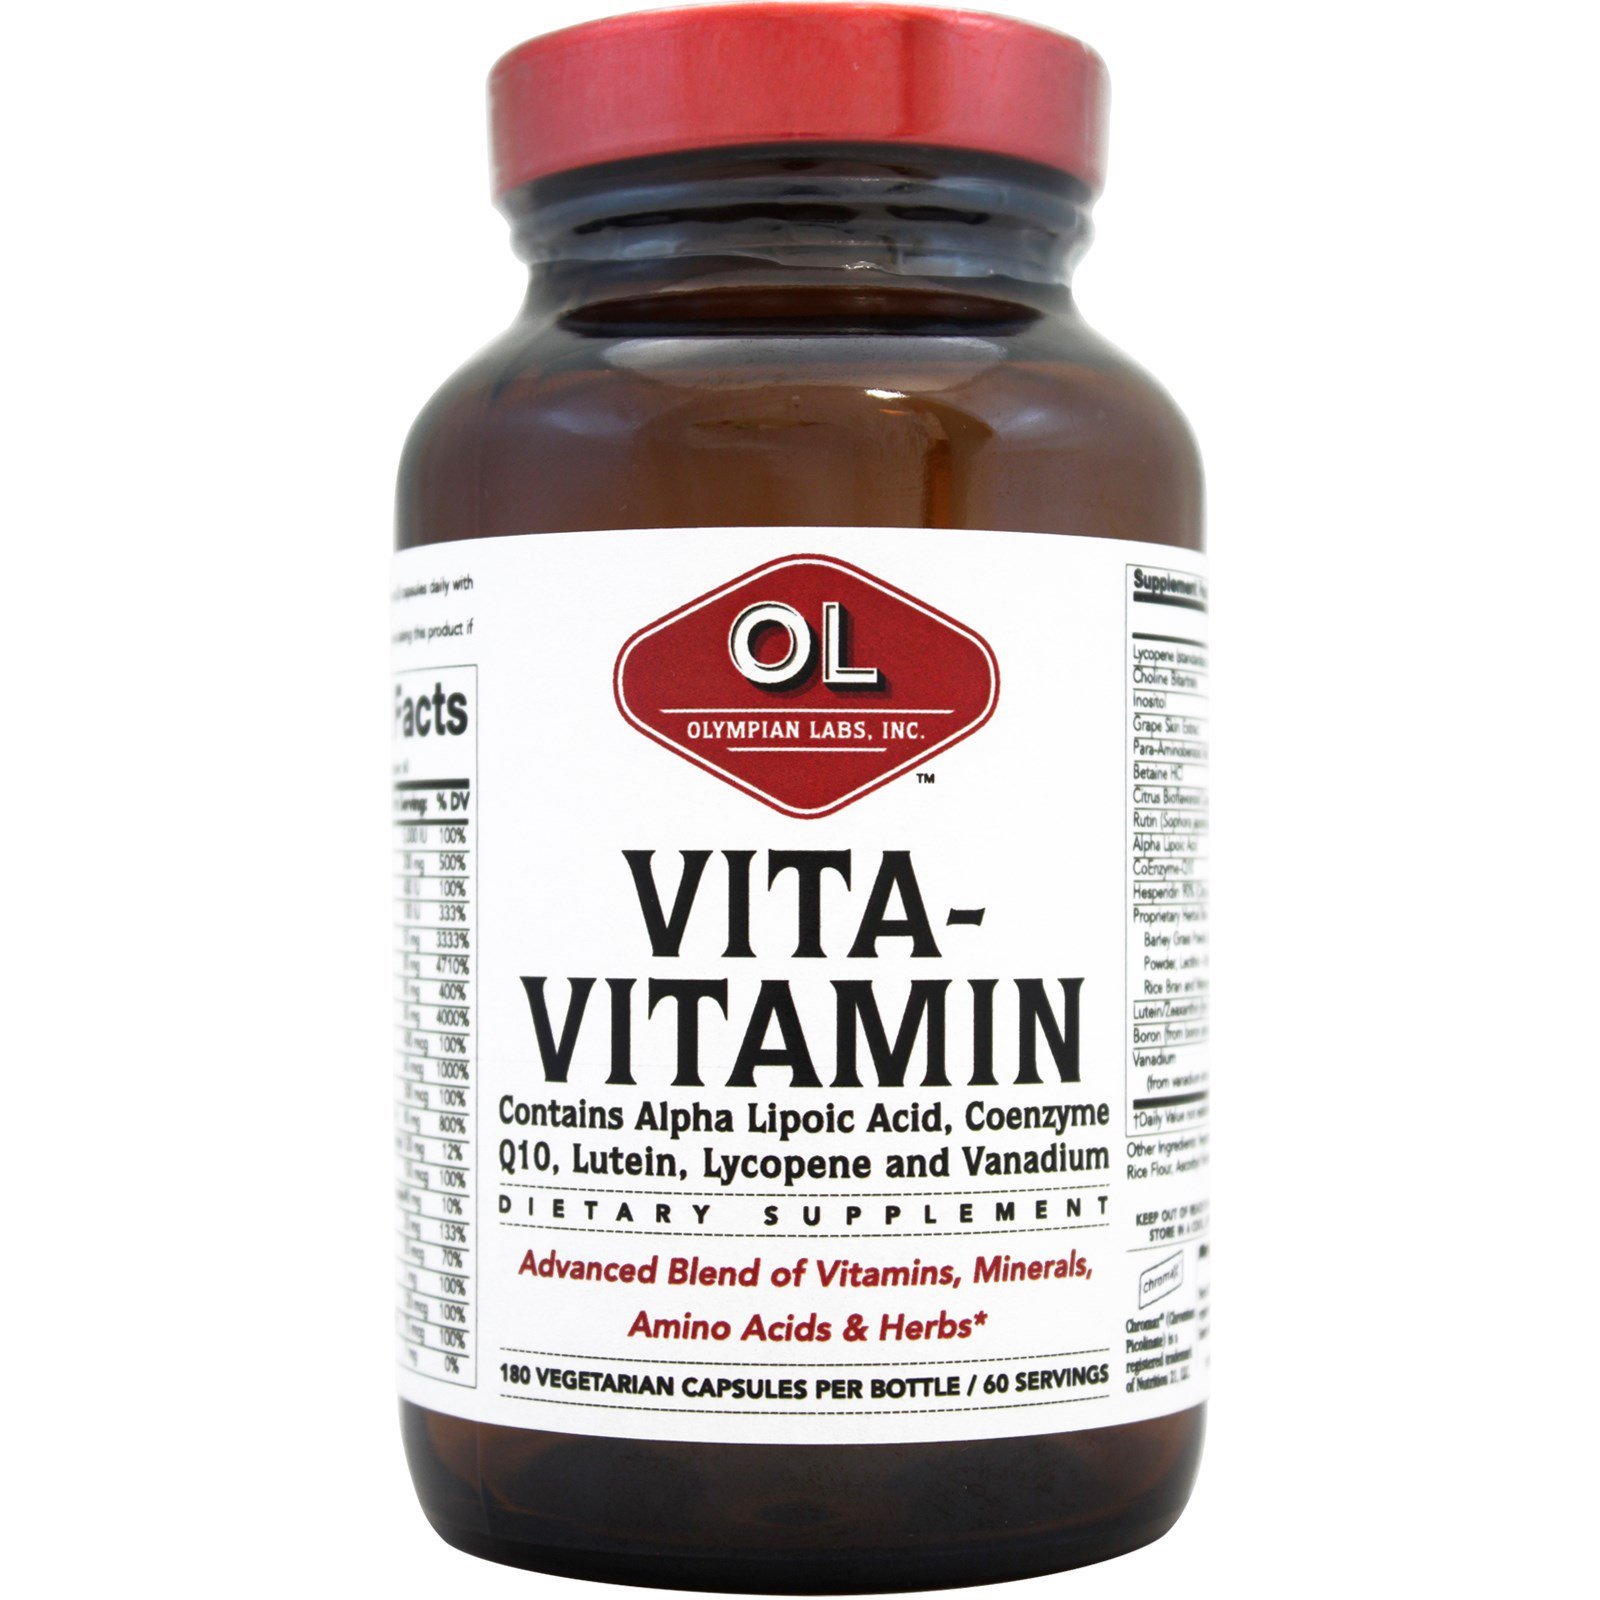 Vita vitamin. Vita витамины Швейцария. Nova vitae vitamine c. Added купить витамин.